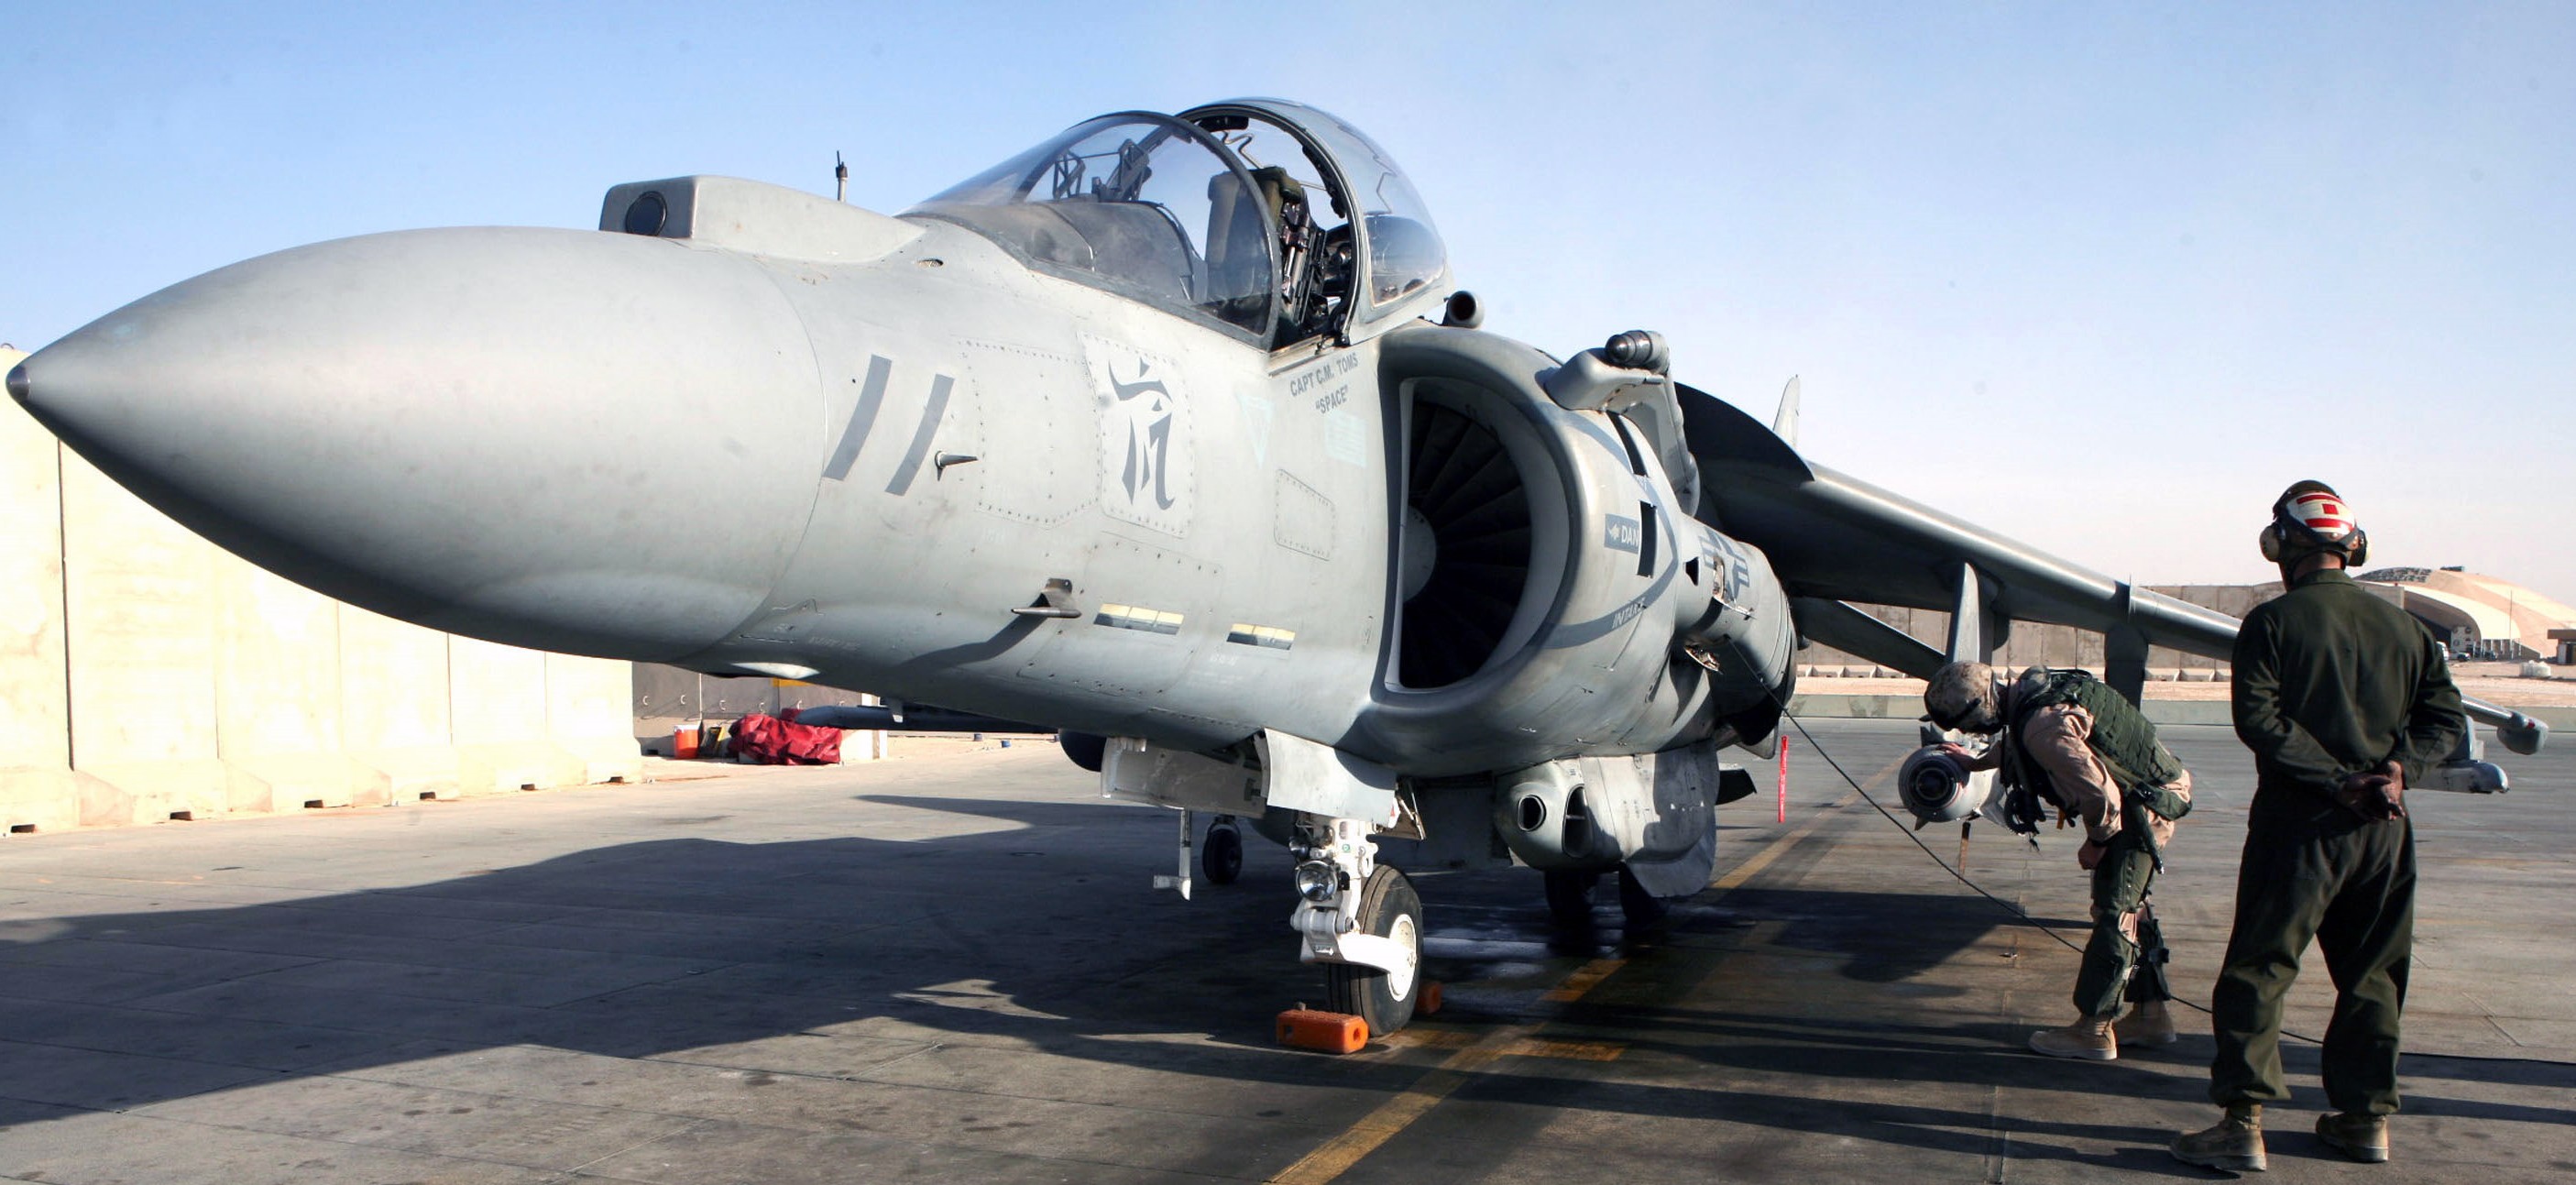 vma-542 tigers marine attack squadron usmc av-8b harrier ii al asad airbase iraq 44